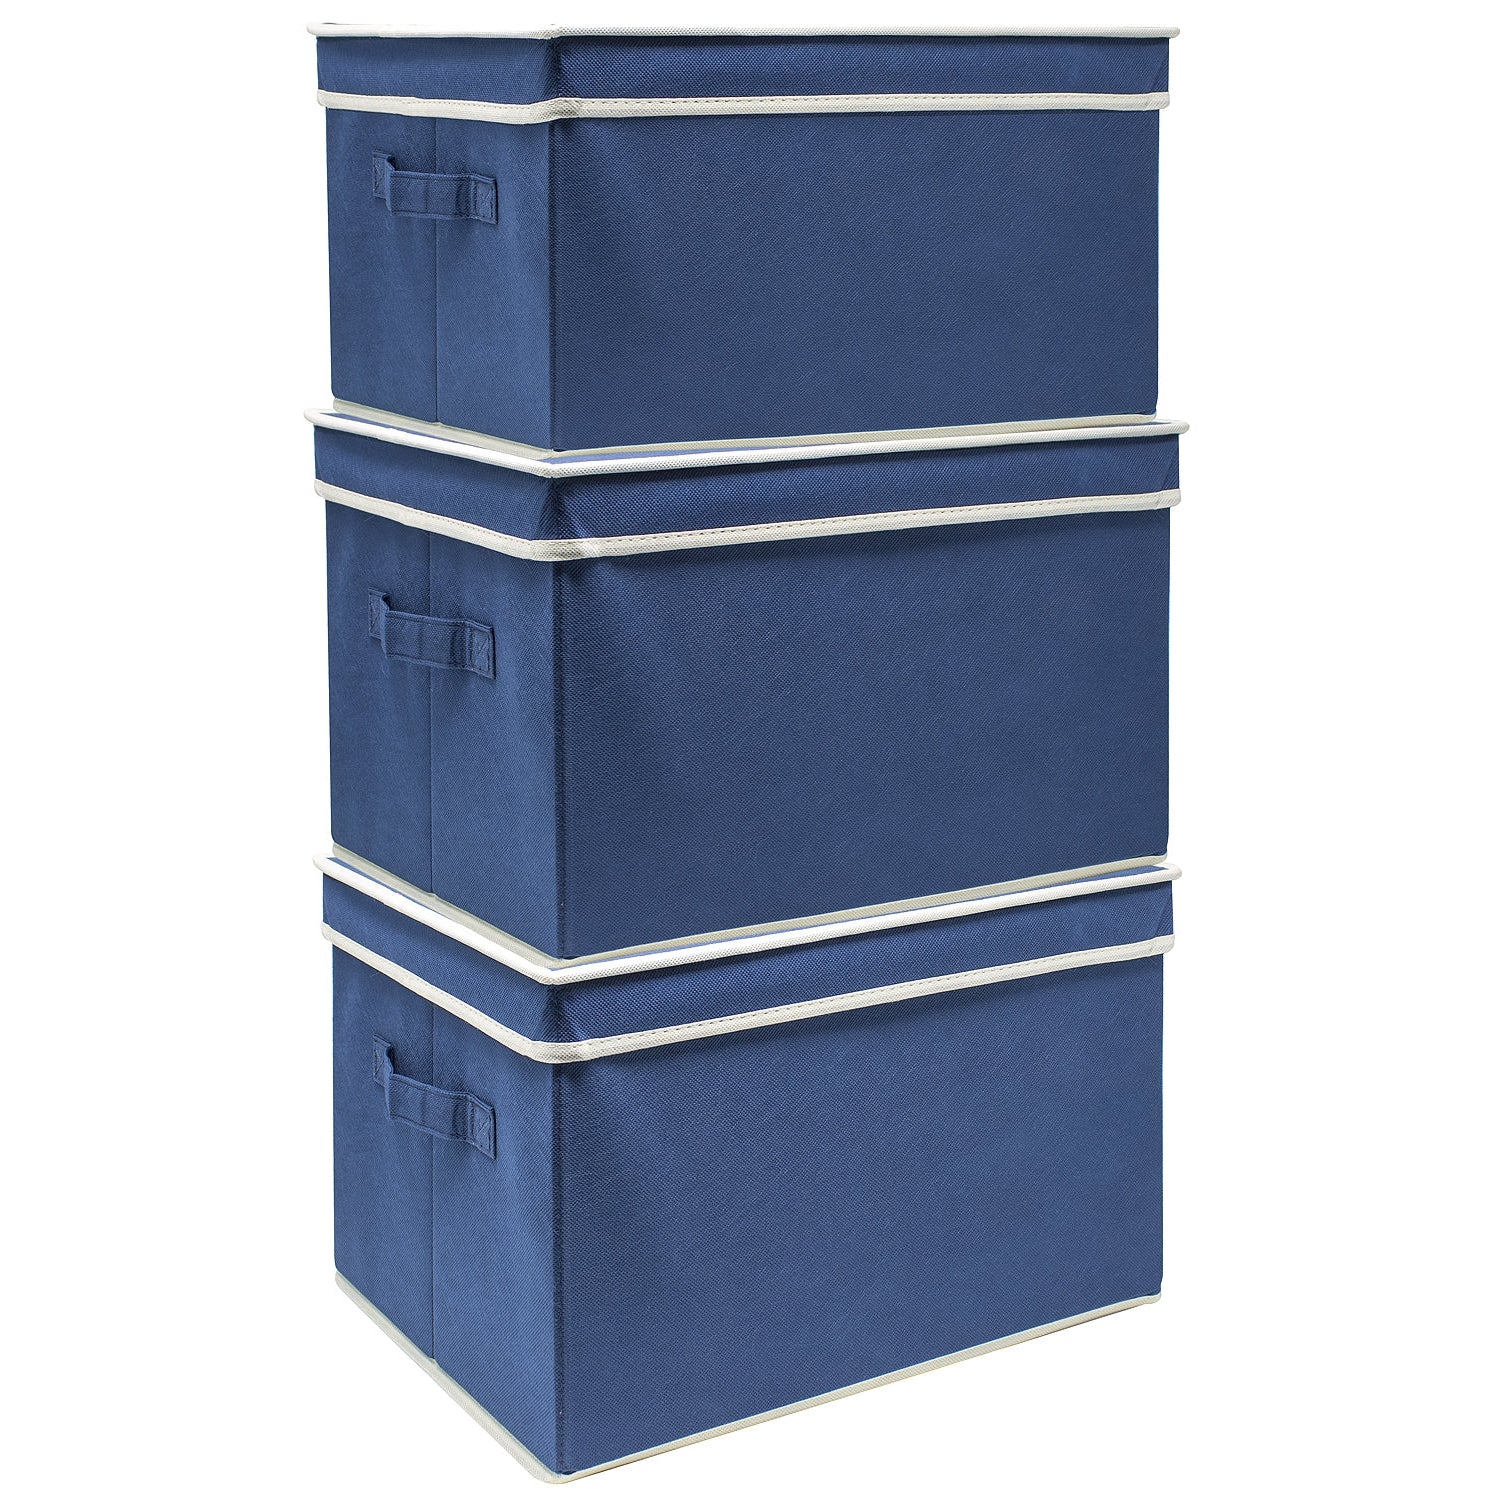 Lidded Storage Box Bins (Set of 3)